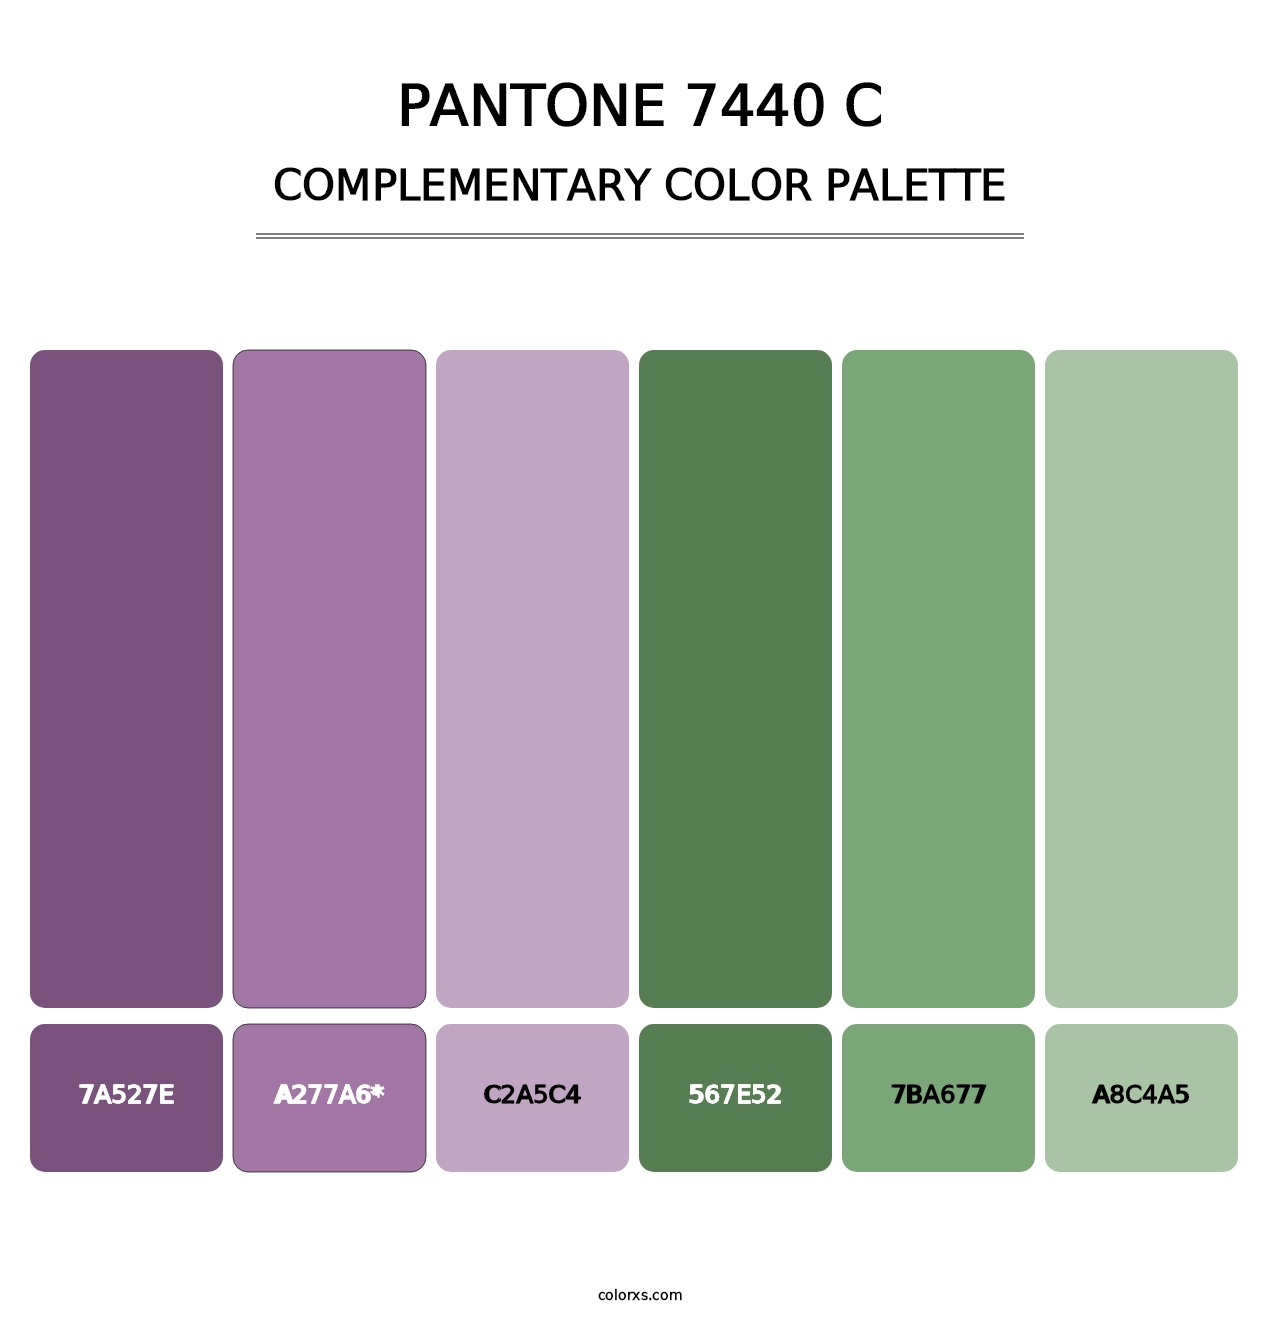 PANTONE 7440 C - Complementary Color Palette